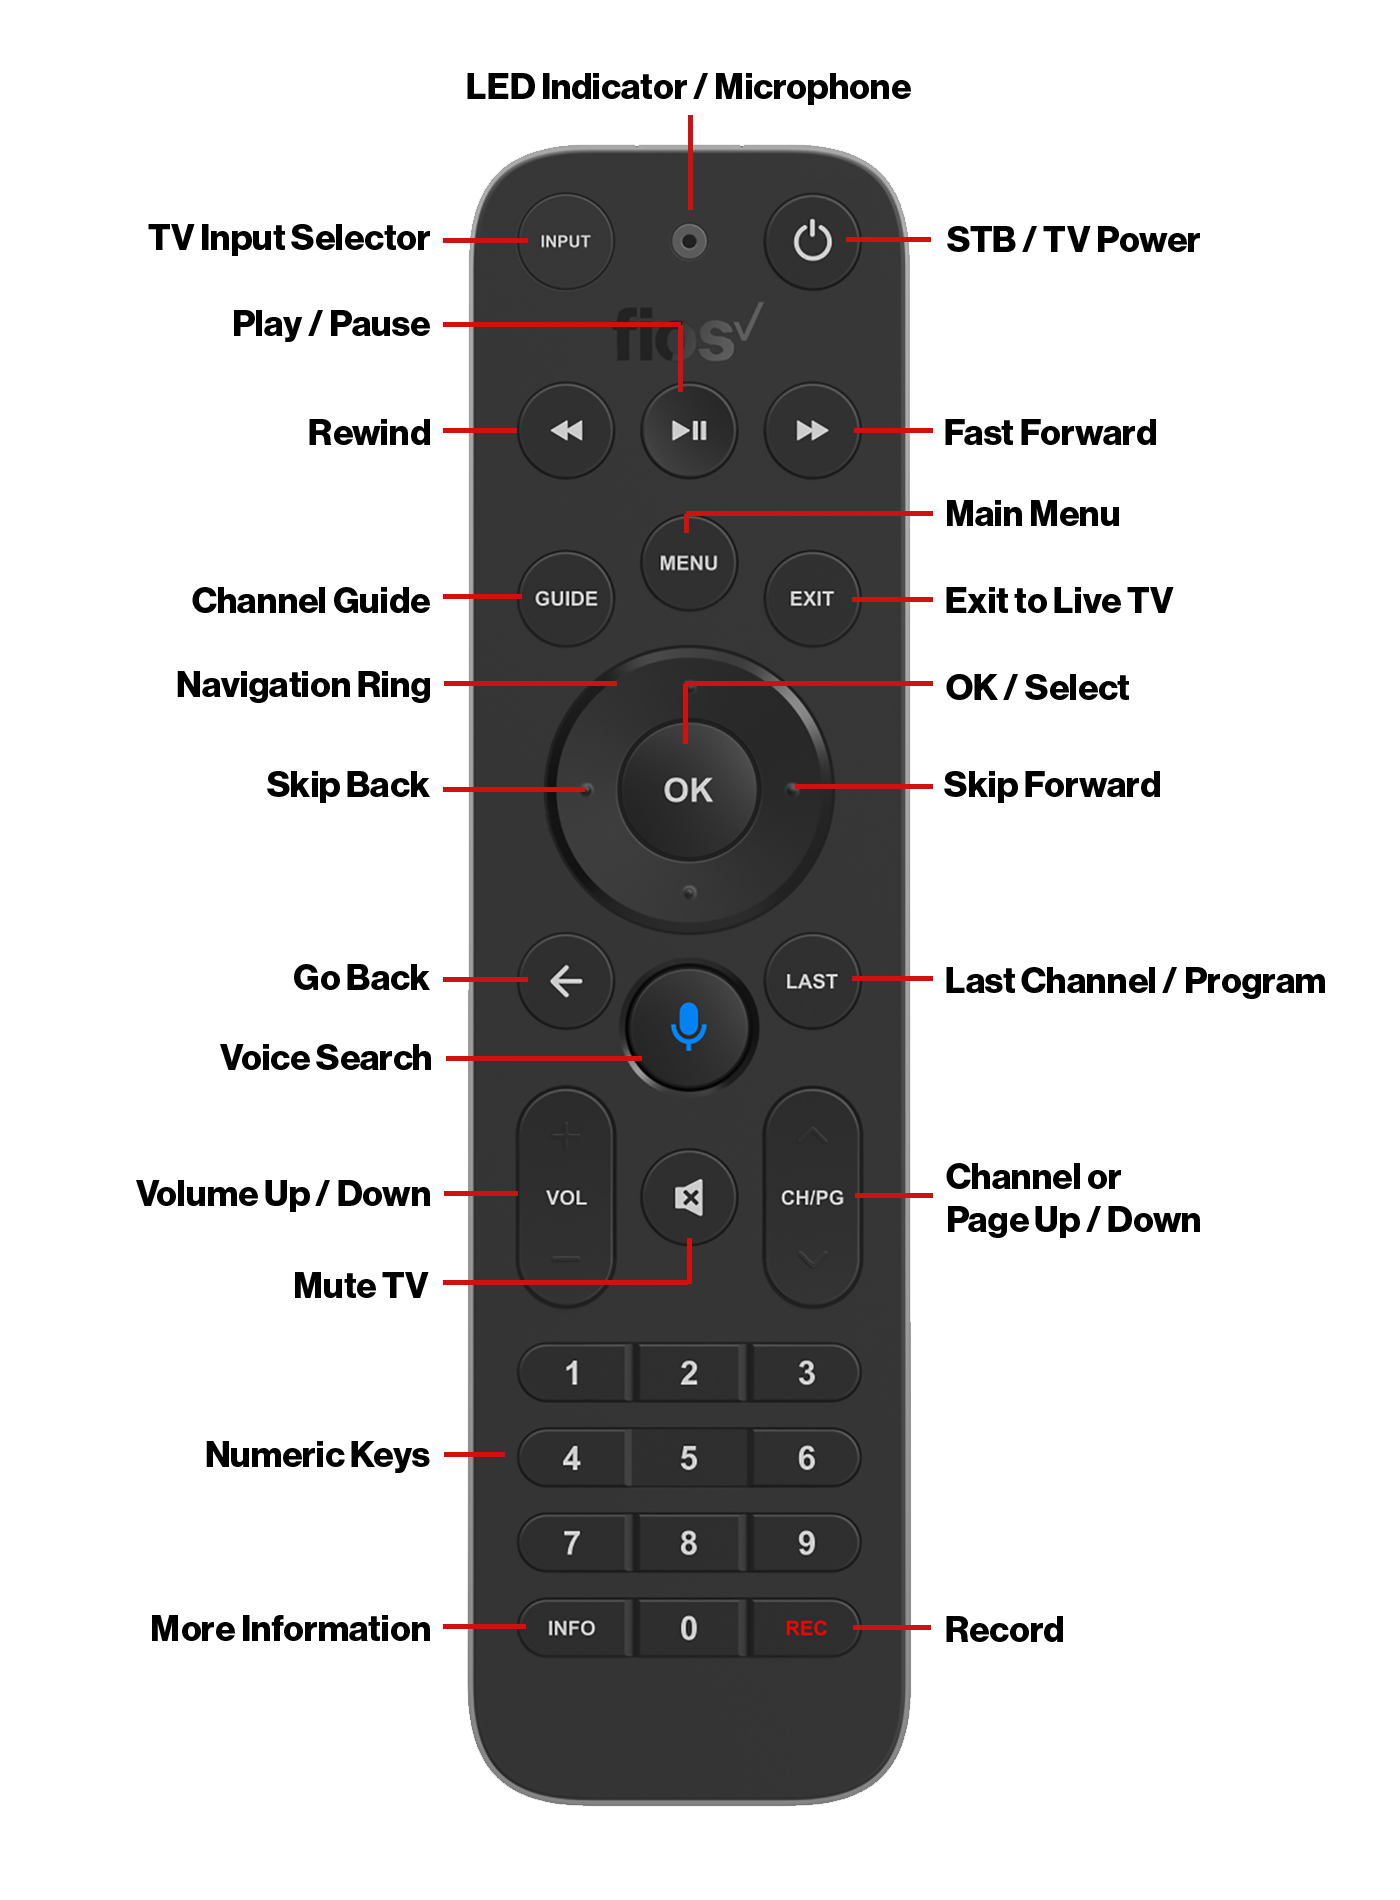 Fios TV Voice Remote